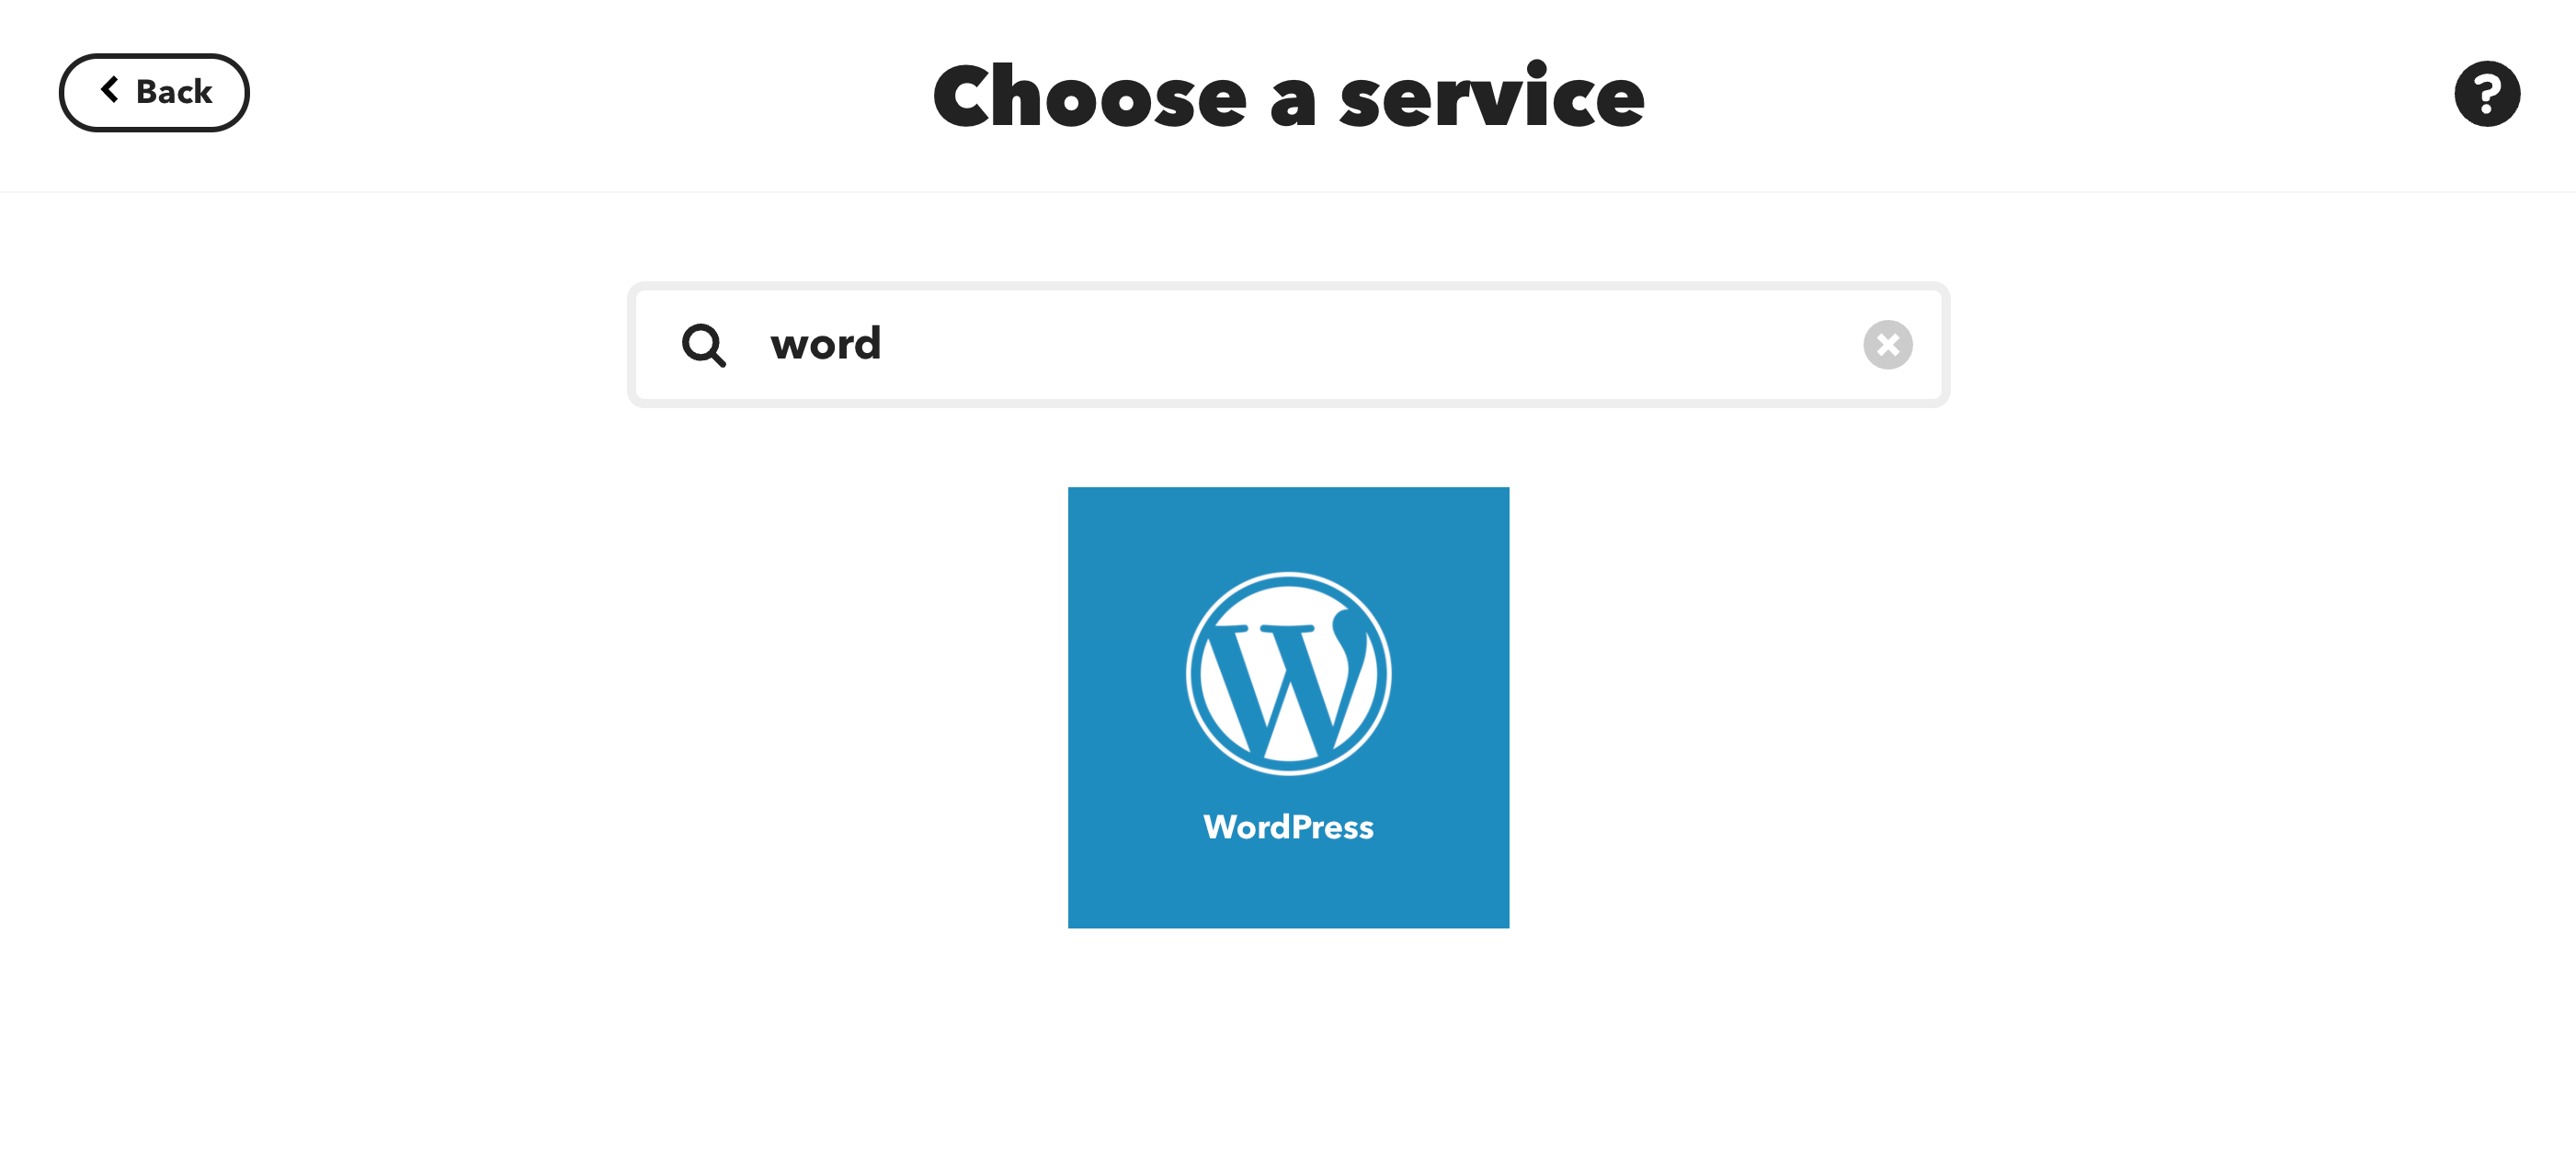 WordPressを選択